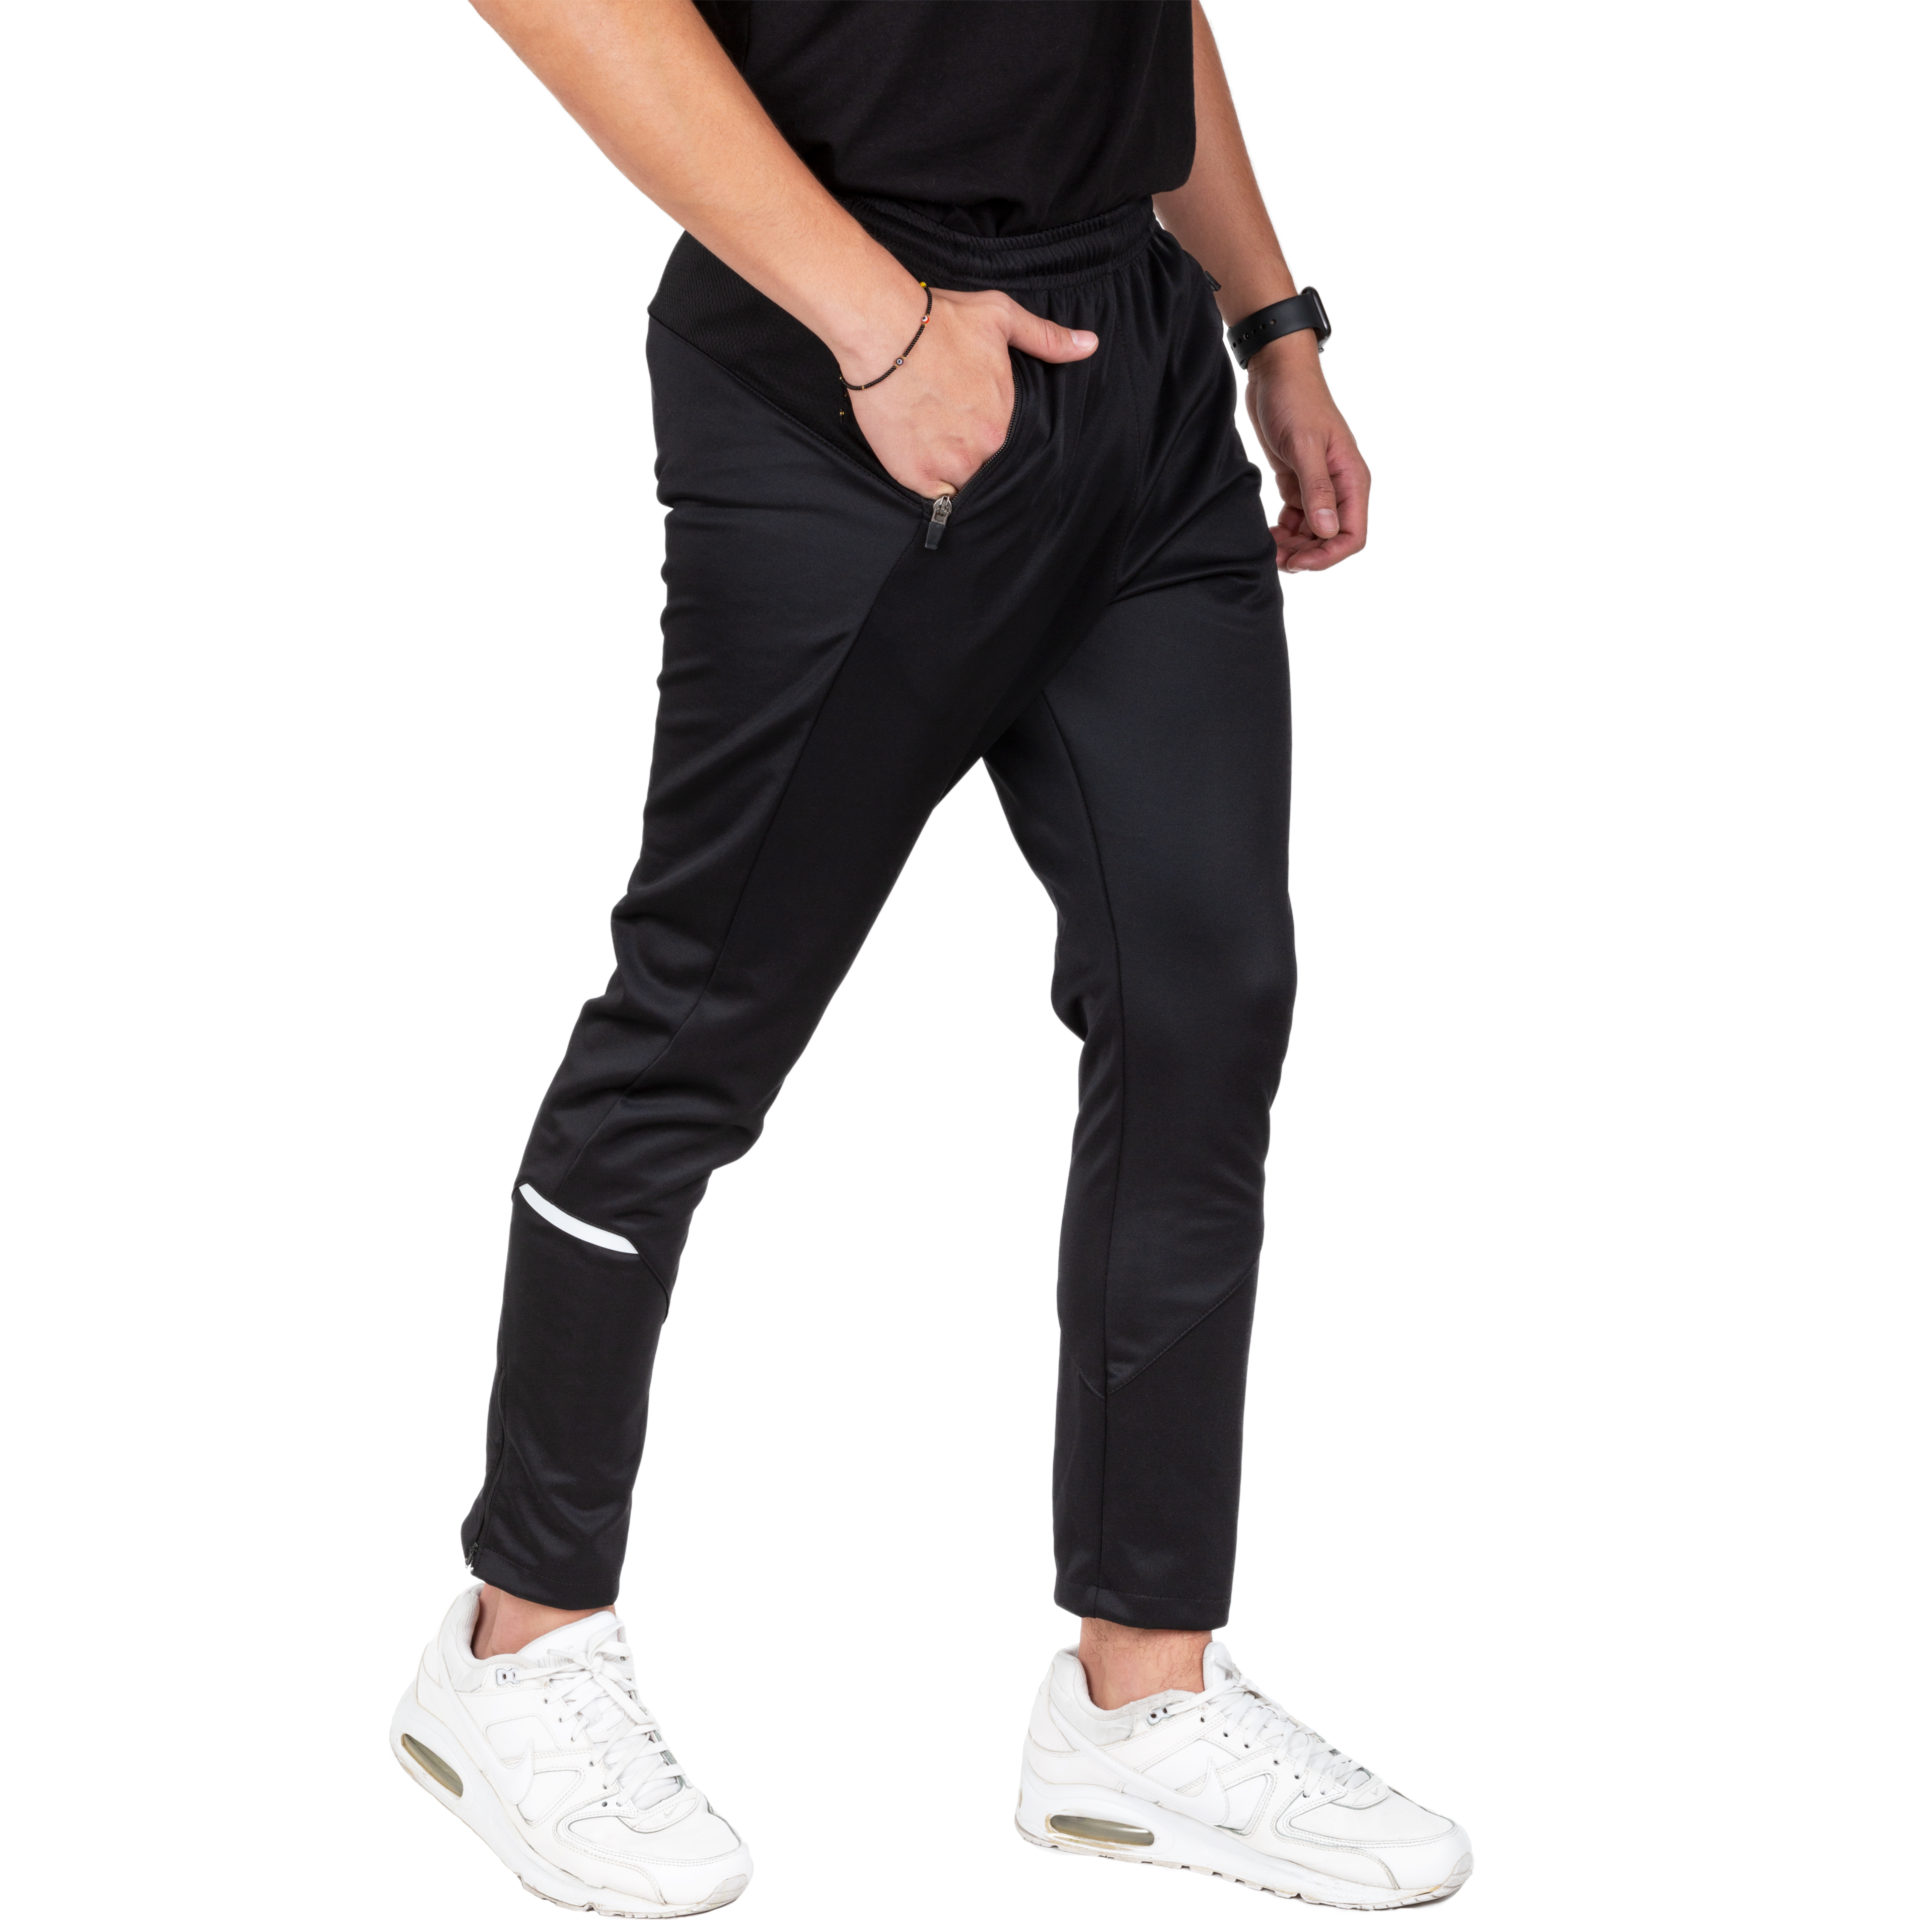 Pants (slim fit) - Negro con vinil blanco